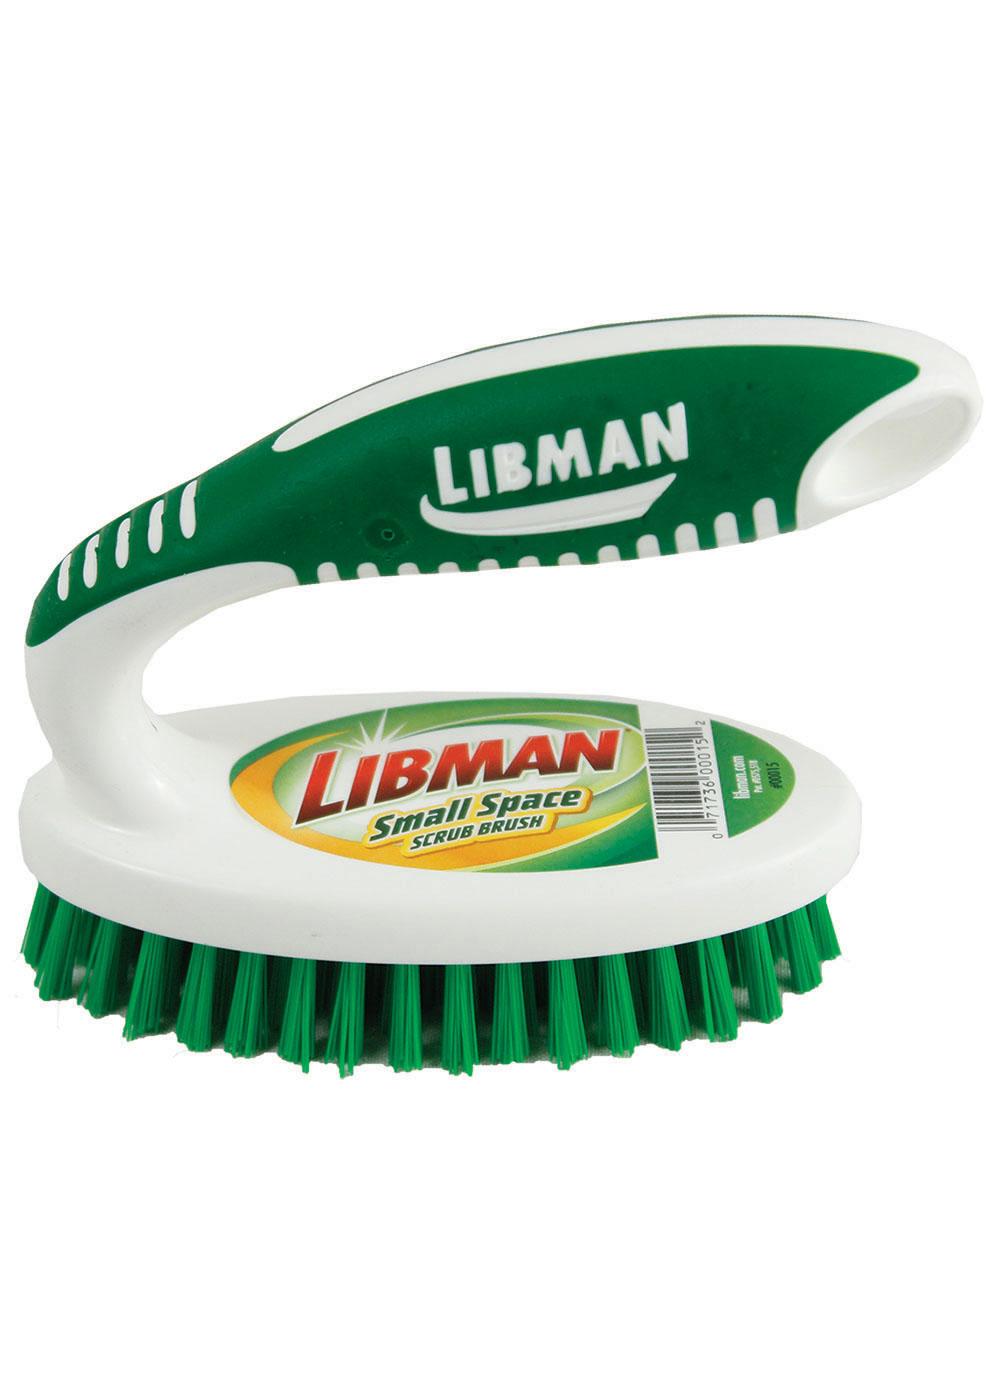 Libman Long Handled Utility Brush